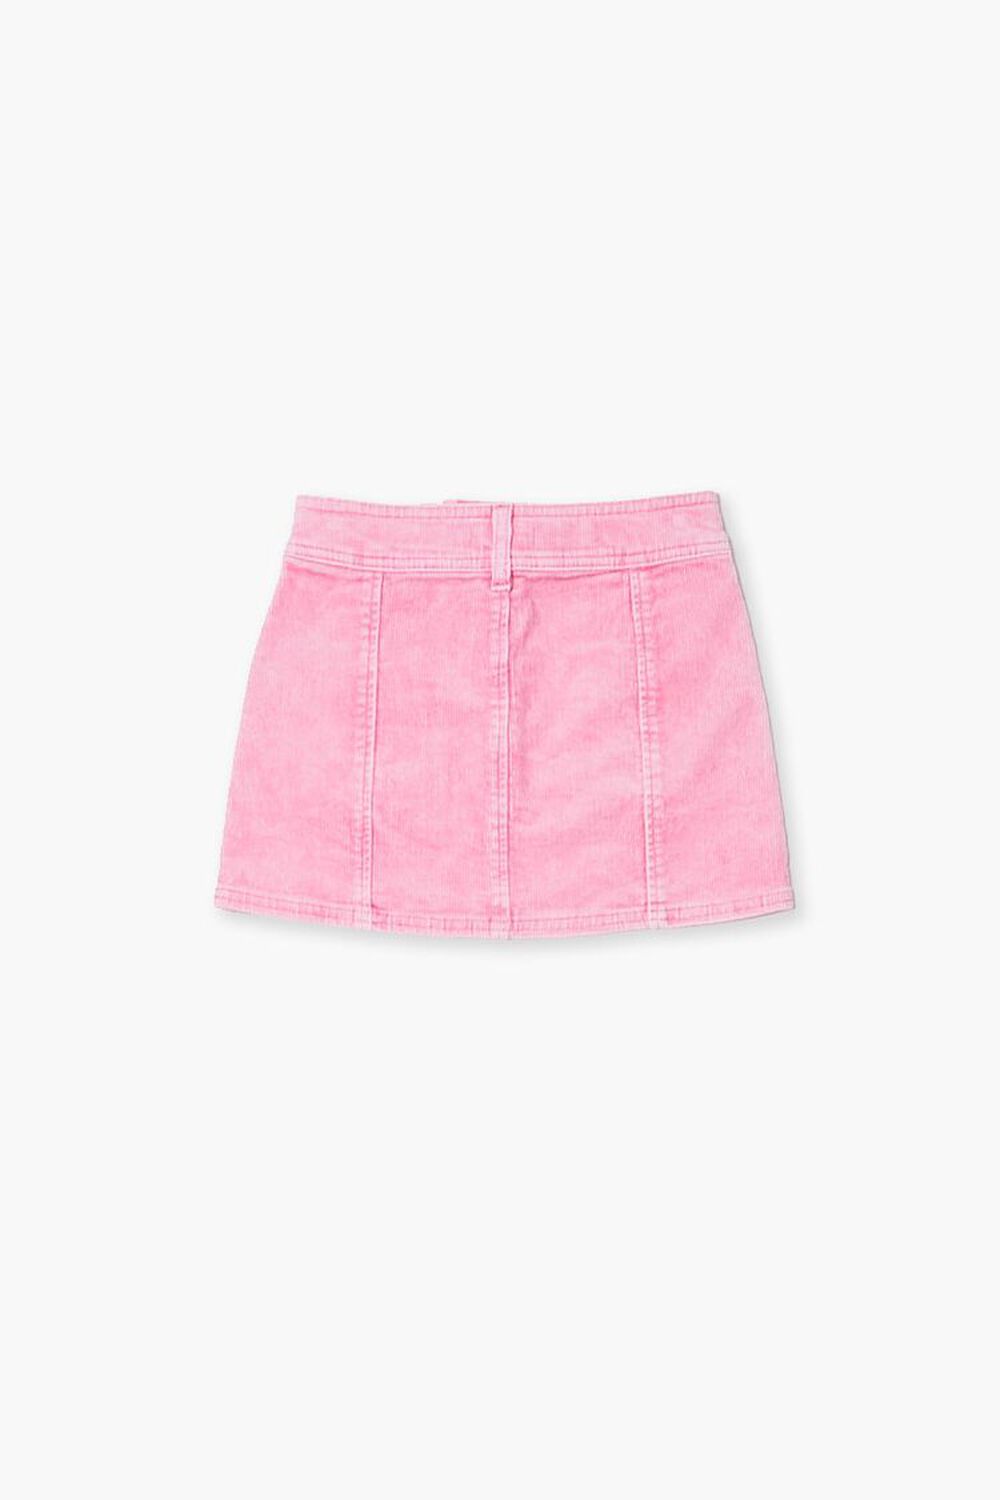 Girls Corduroy Mineral Wash Skirt (Kids), image 2